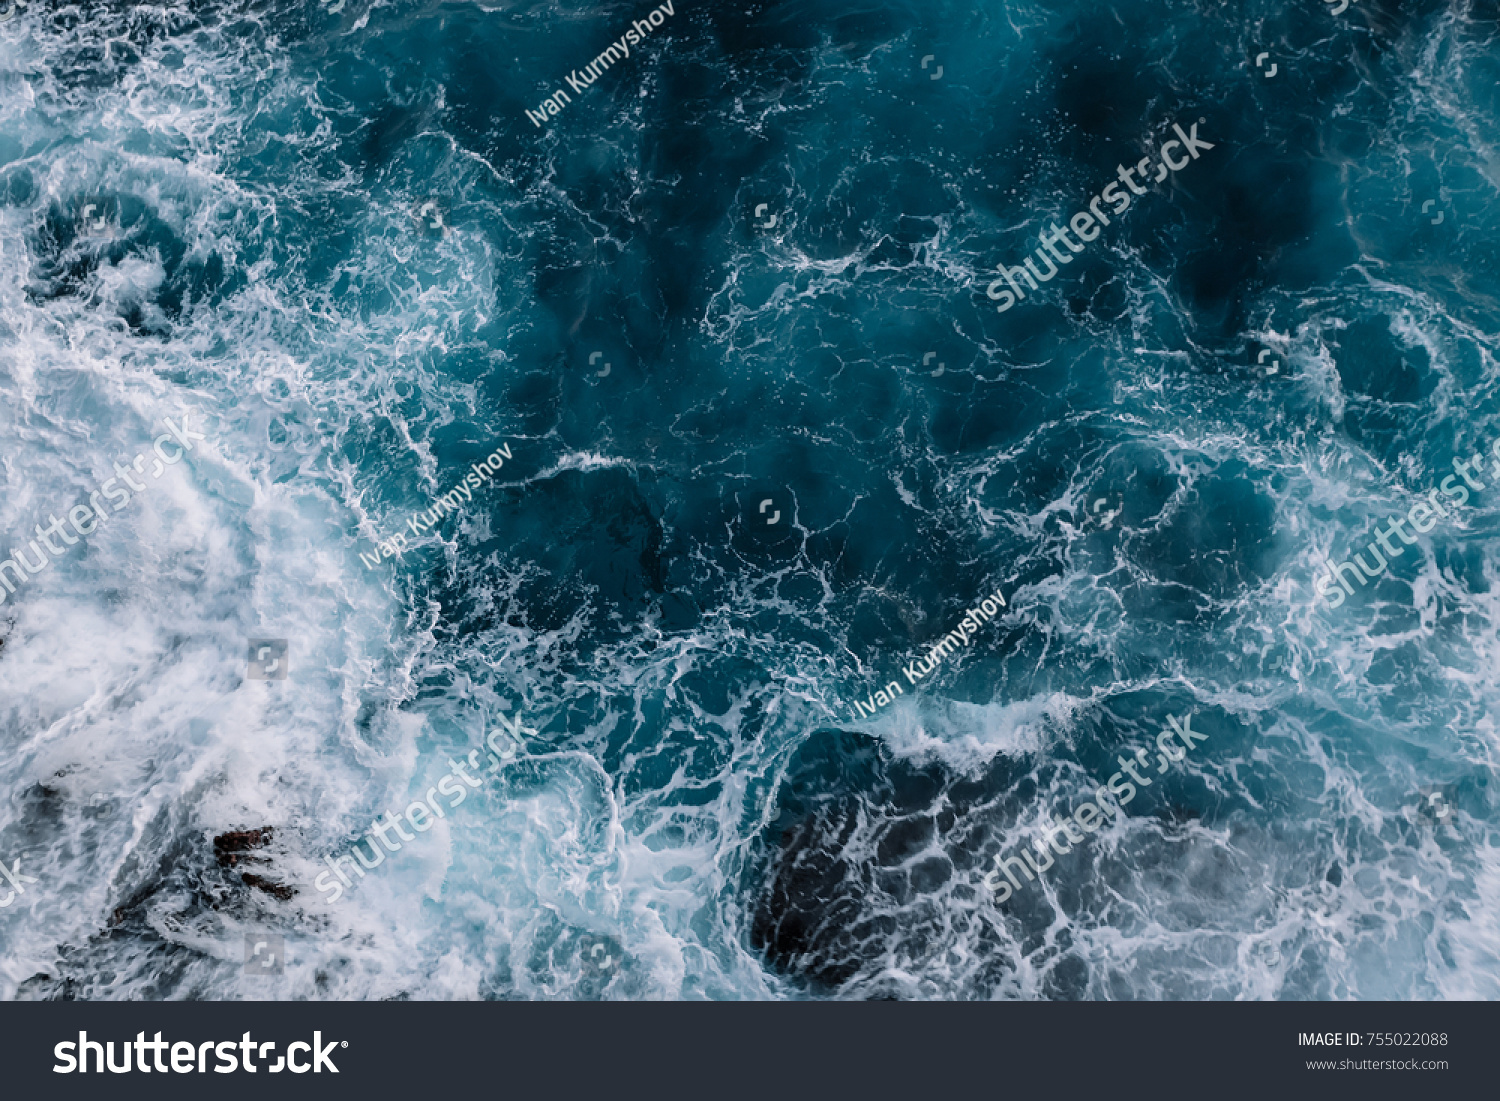 Ocean aerial images stock photos vectors